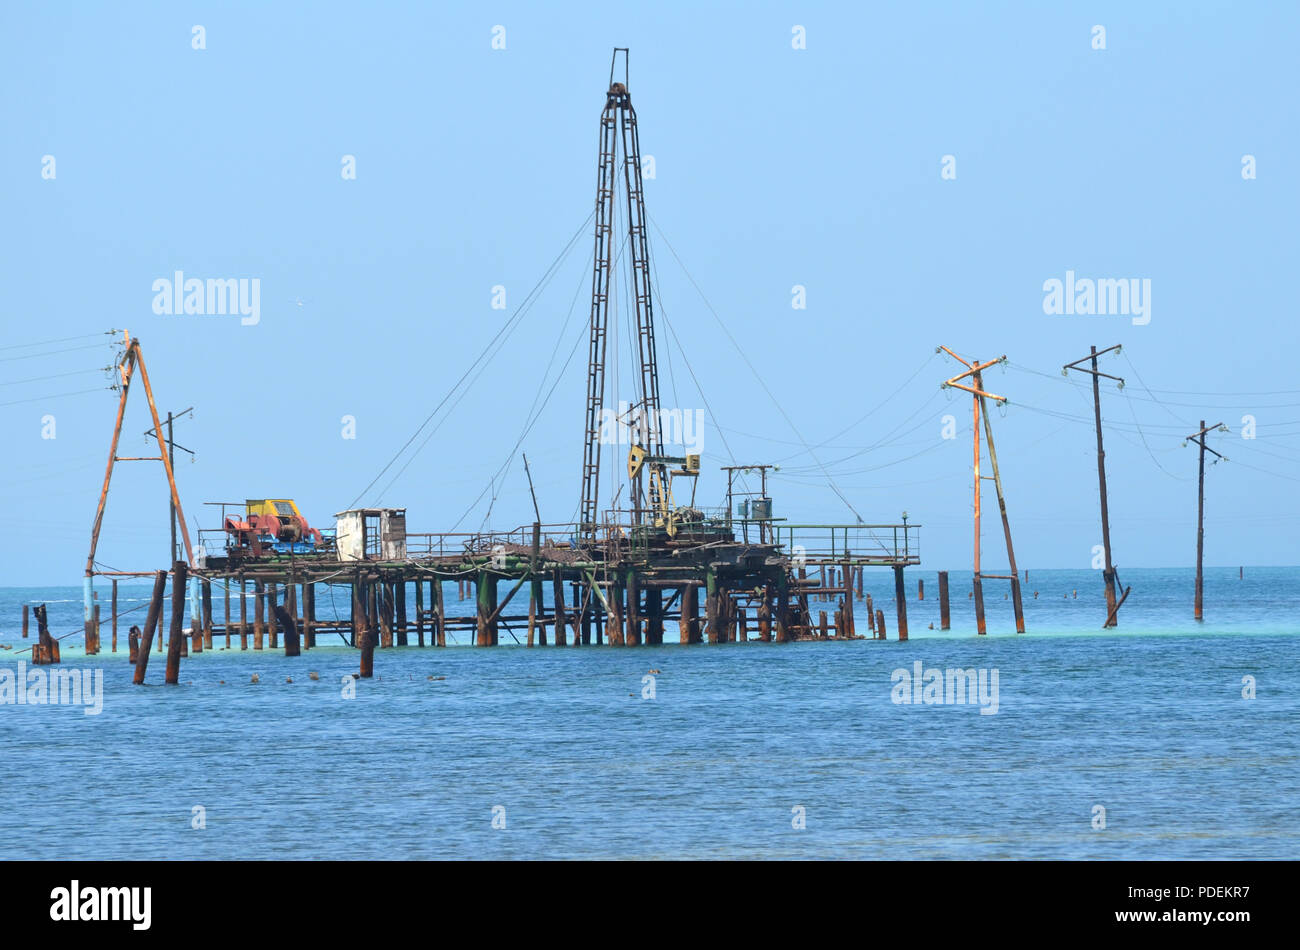 Oil rigs in the Caspian Sea, Absheron Peninsula, Azerbaijan Stock Photo